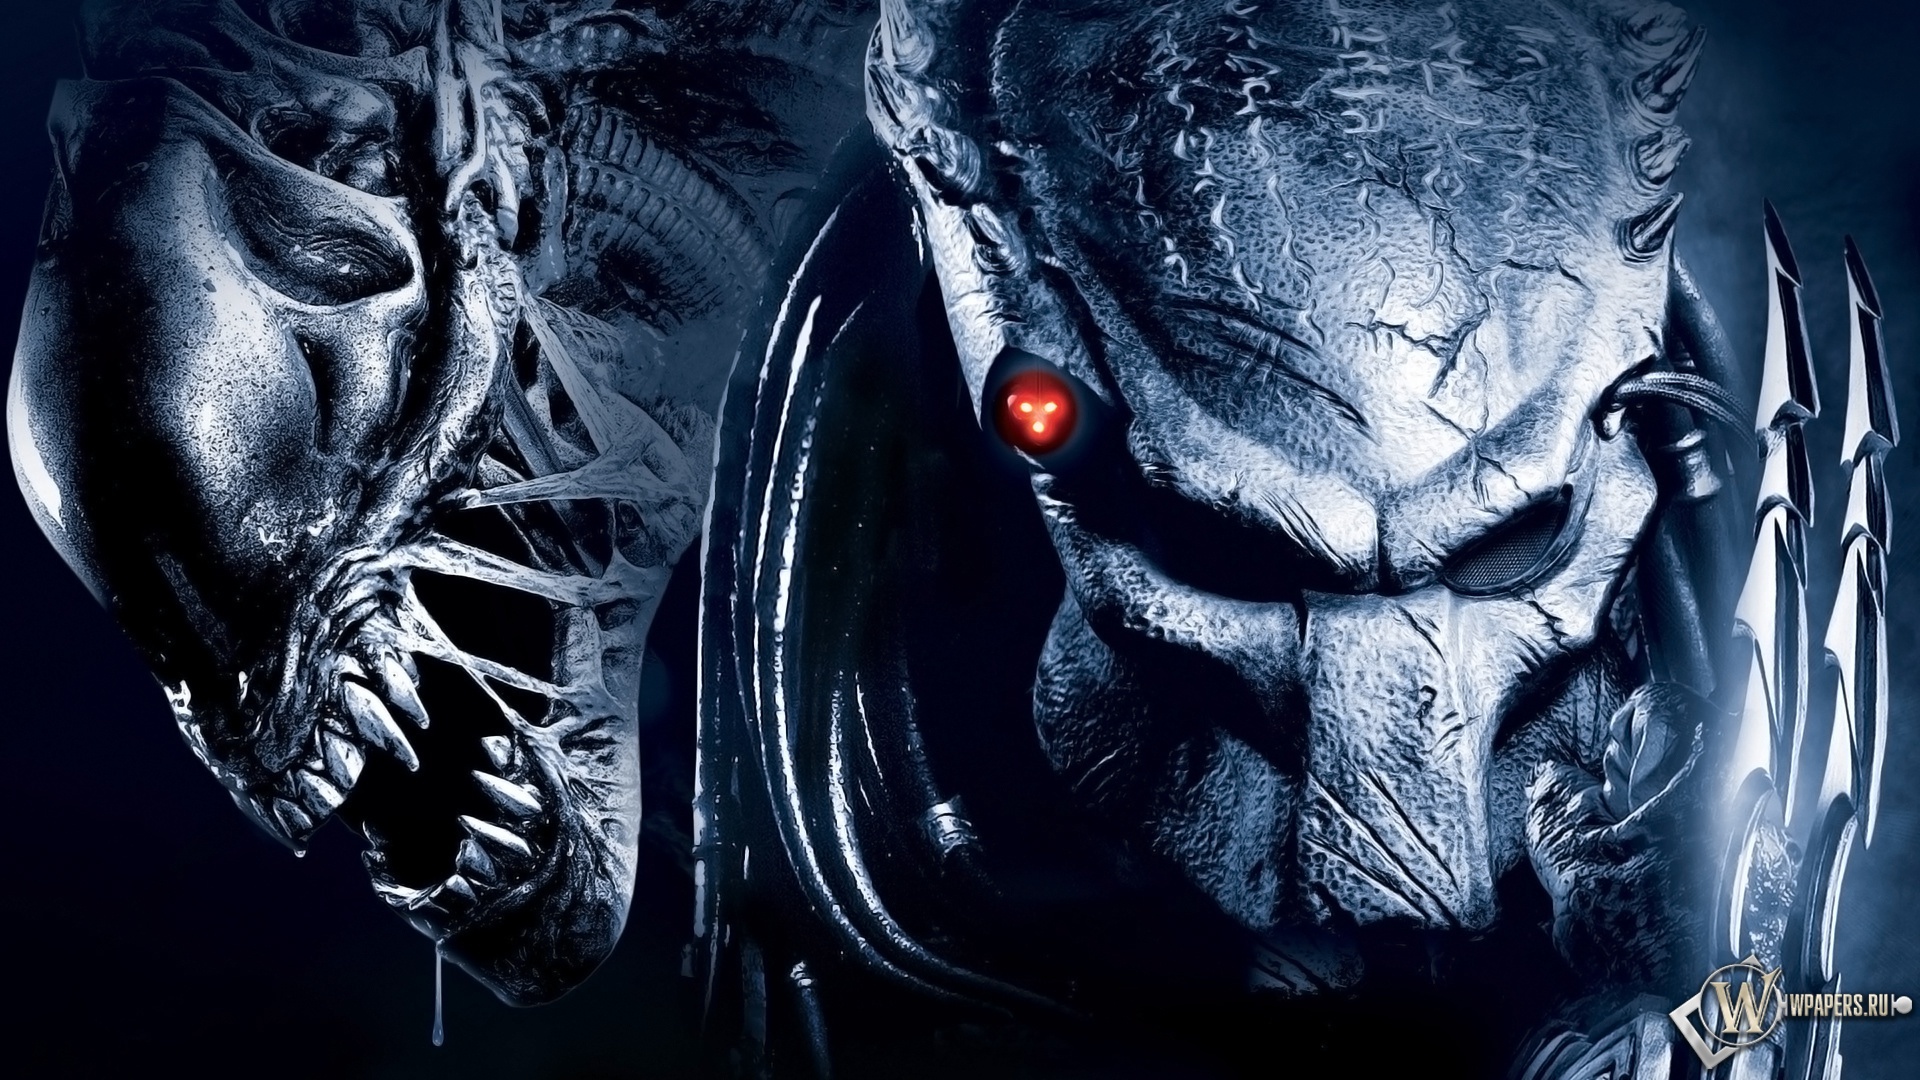 Movie Alien Vs Predator Wallpaper